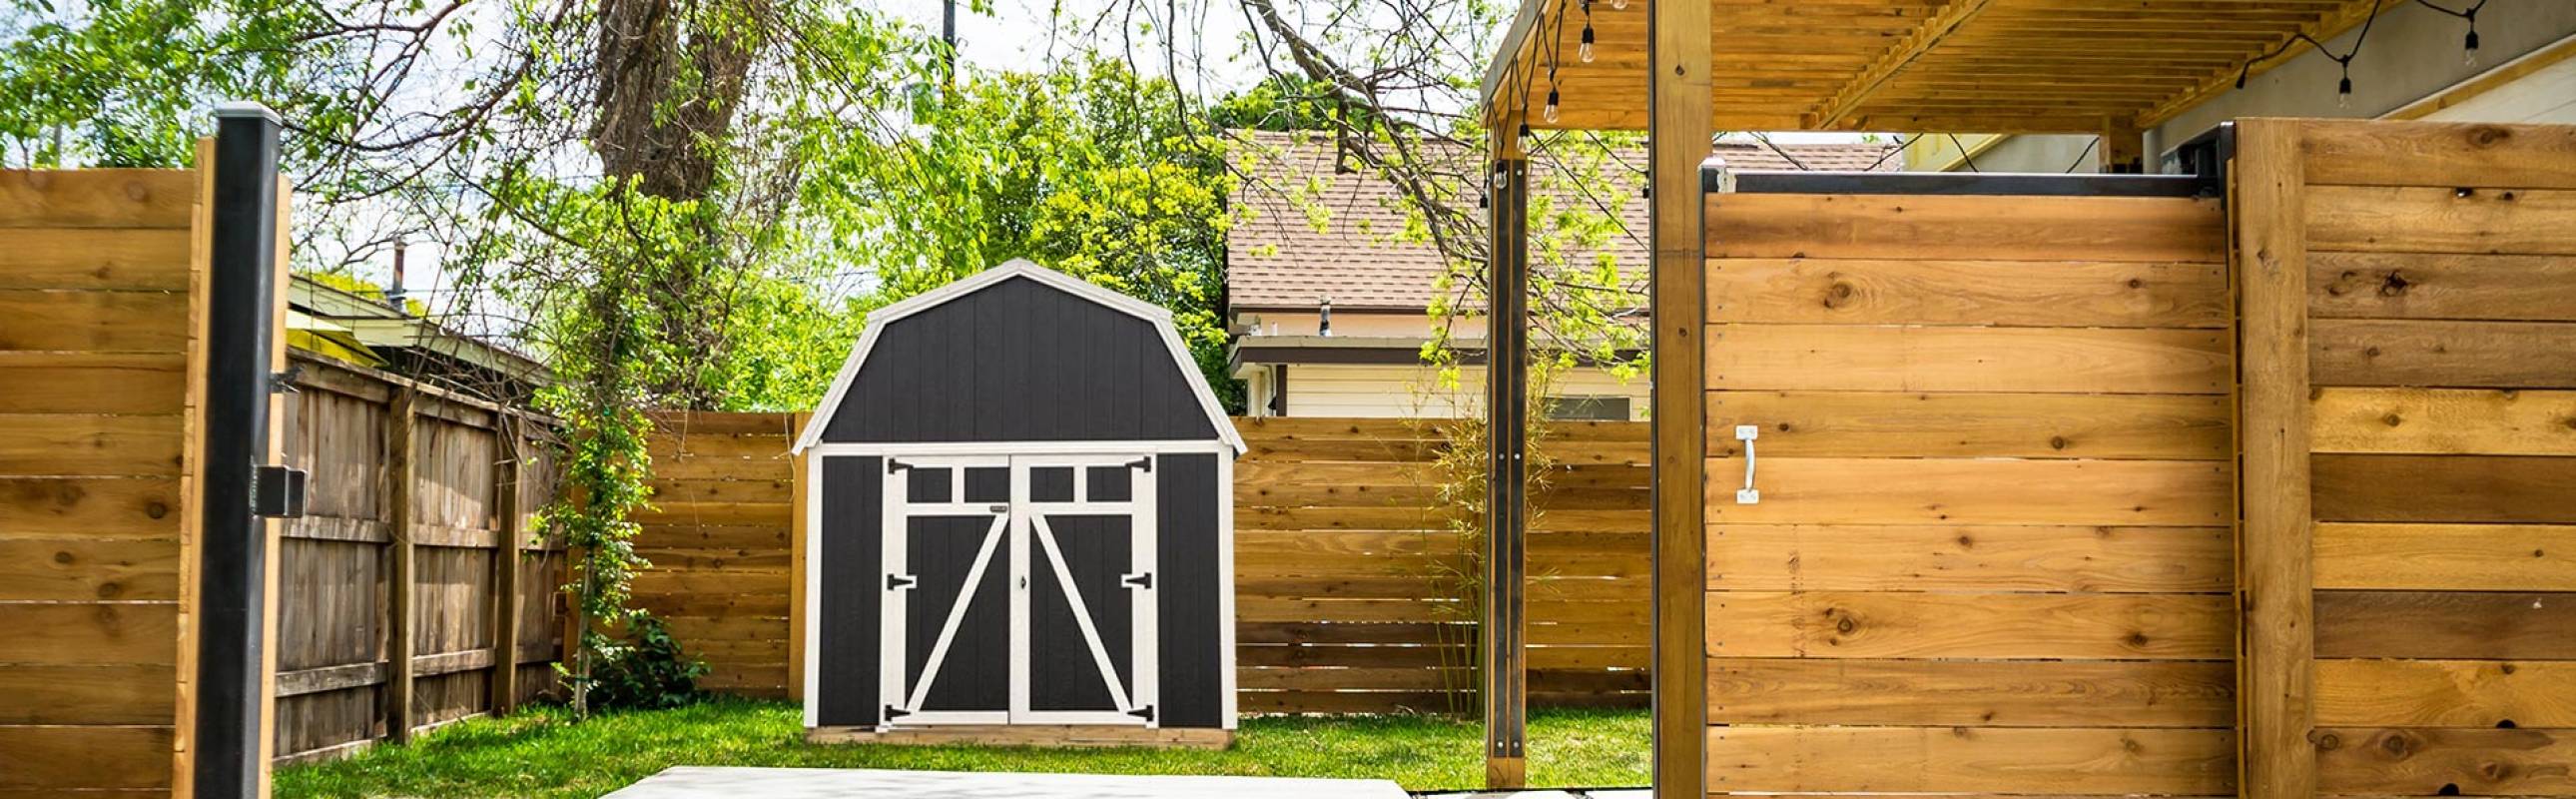 Black with white trim Stellar Lofted Barn in backyard